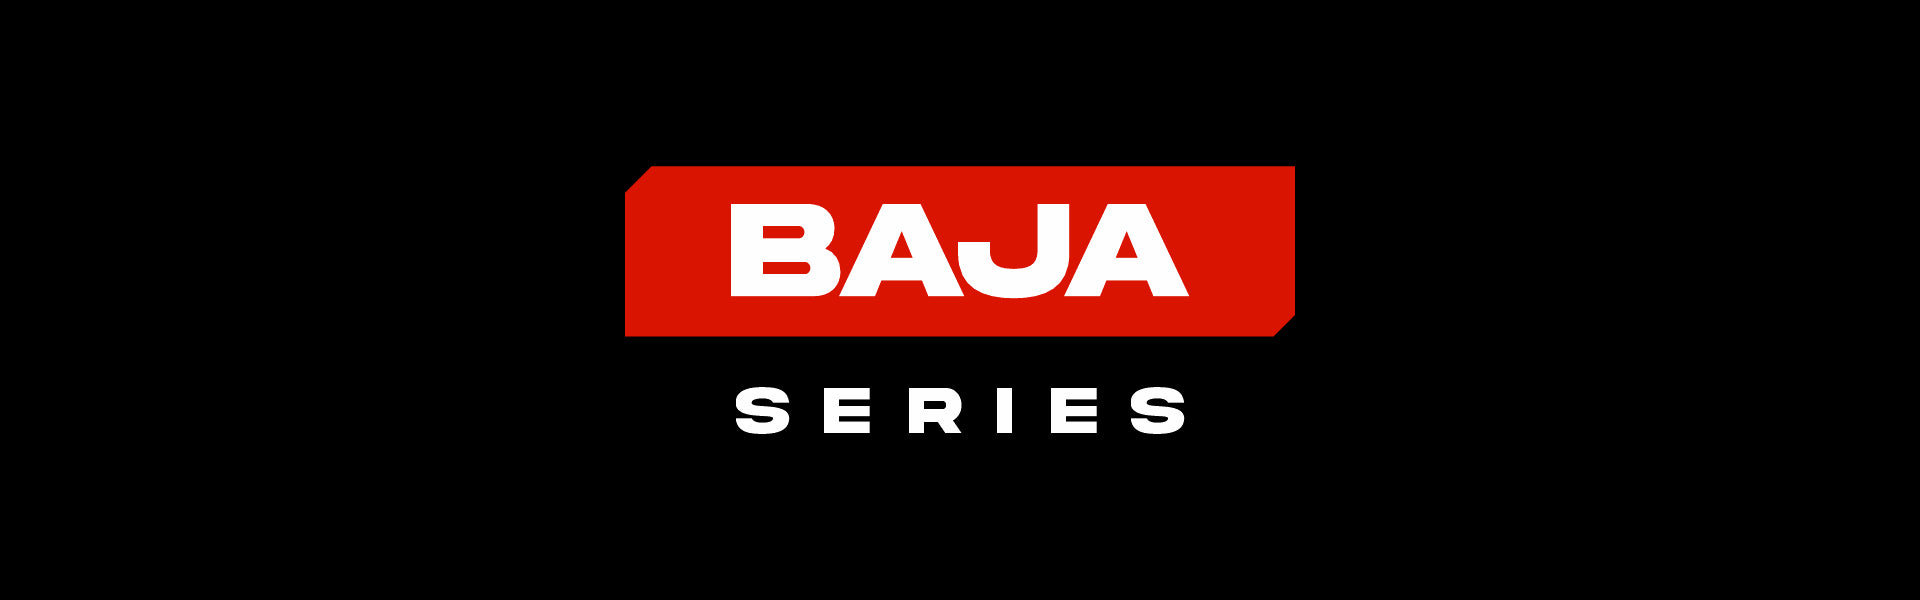 Baja Series